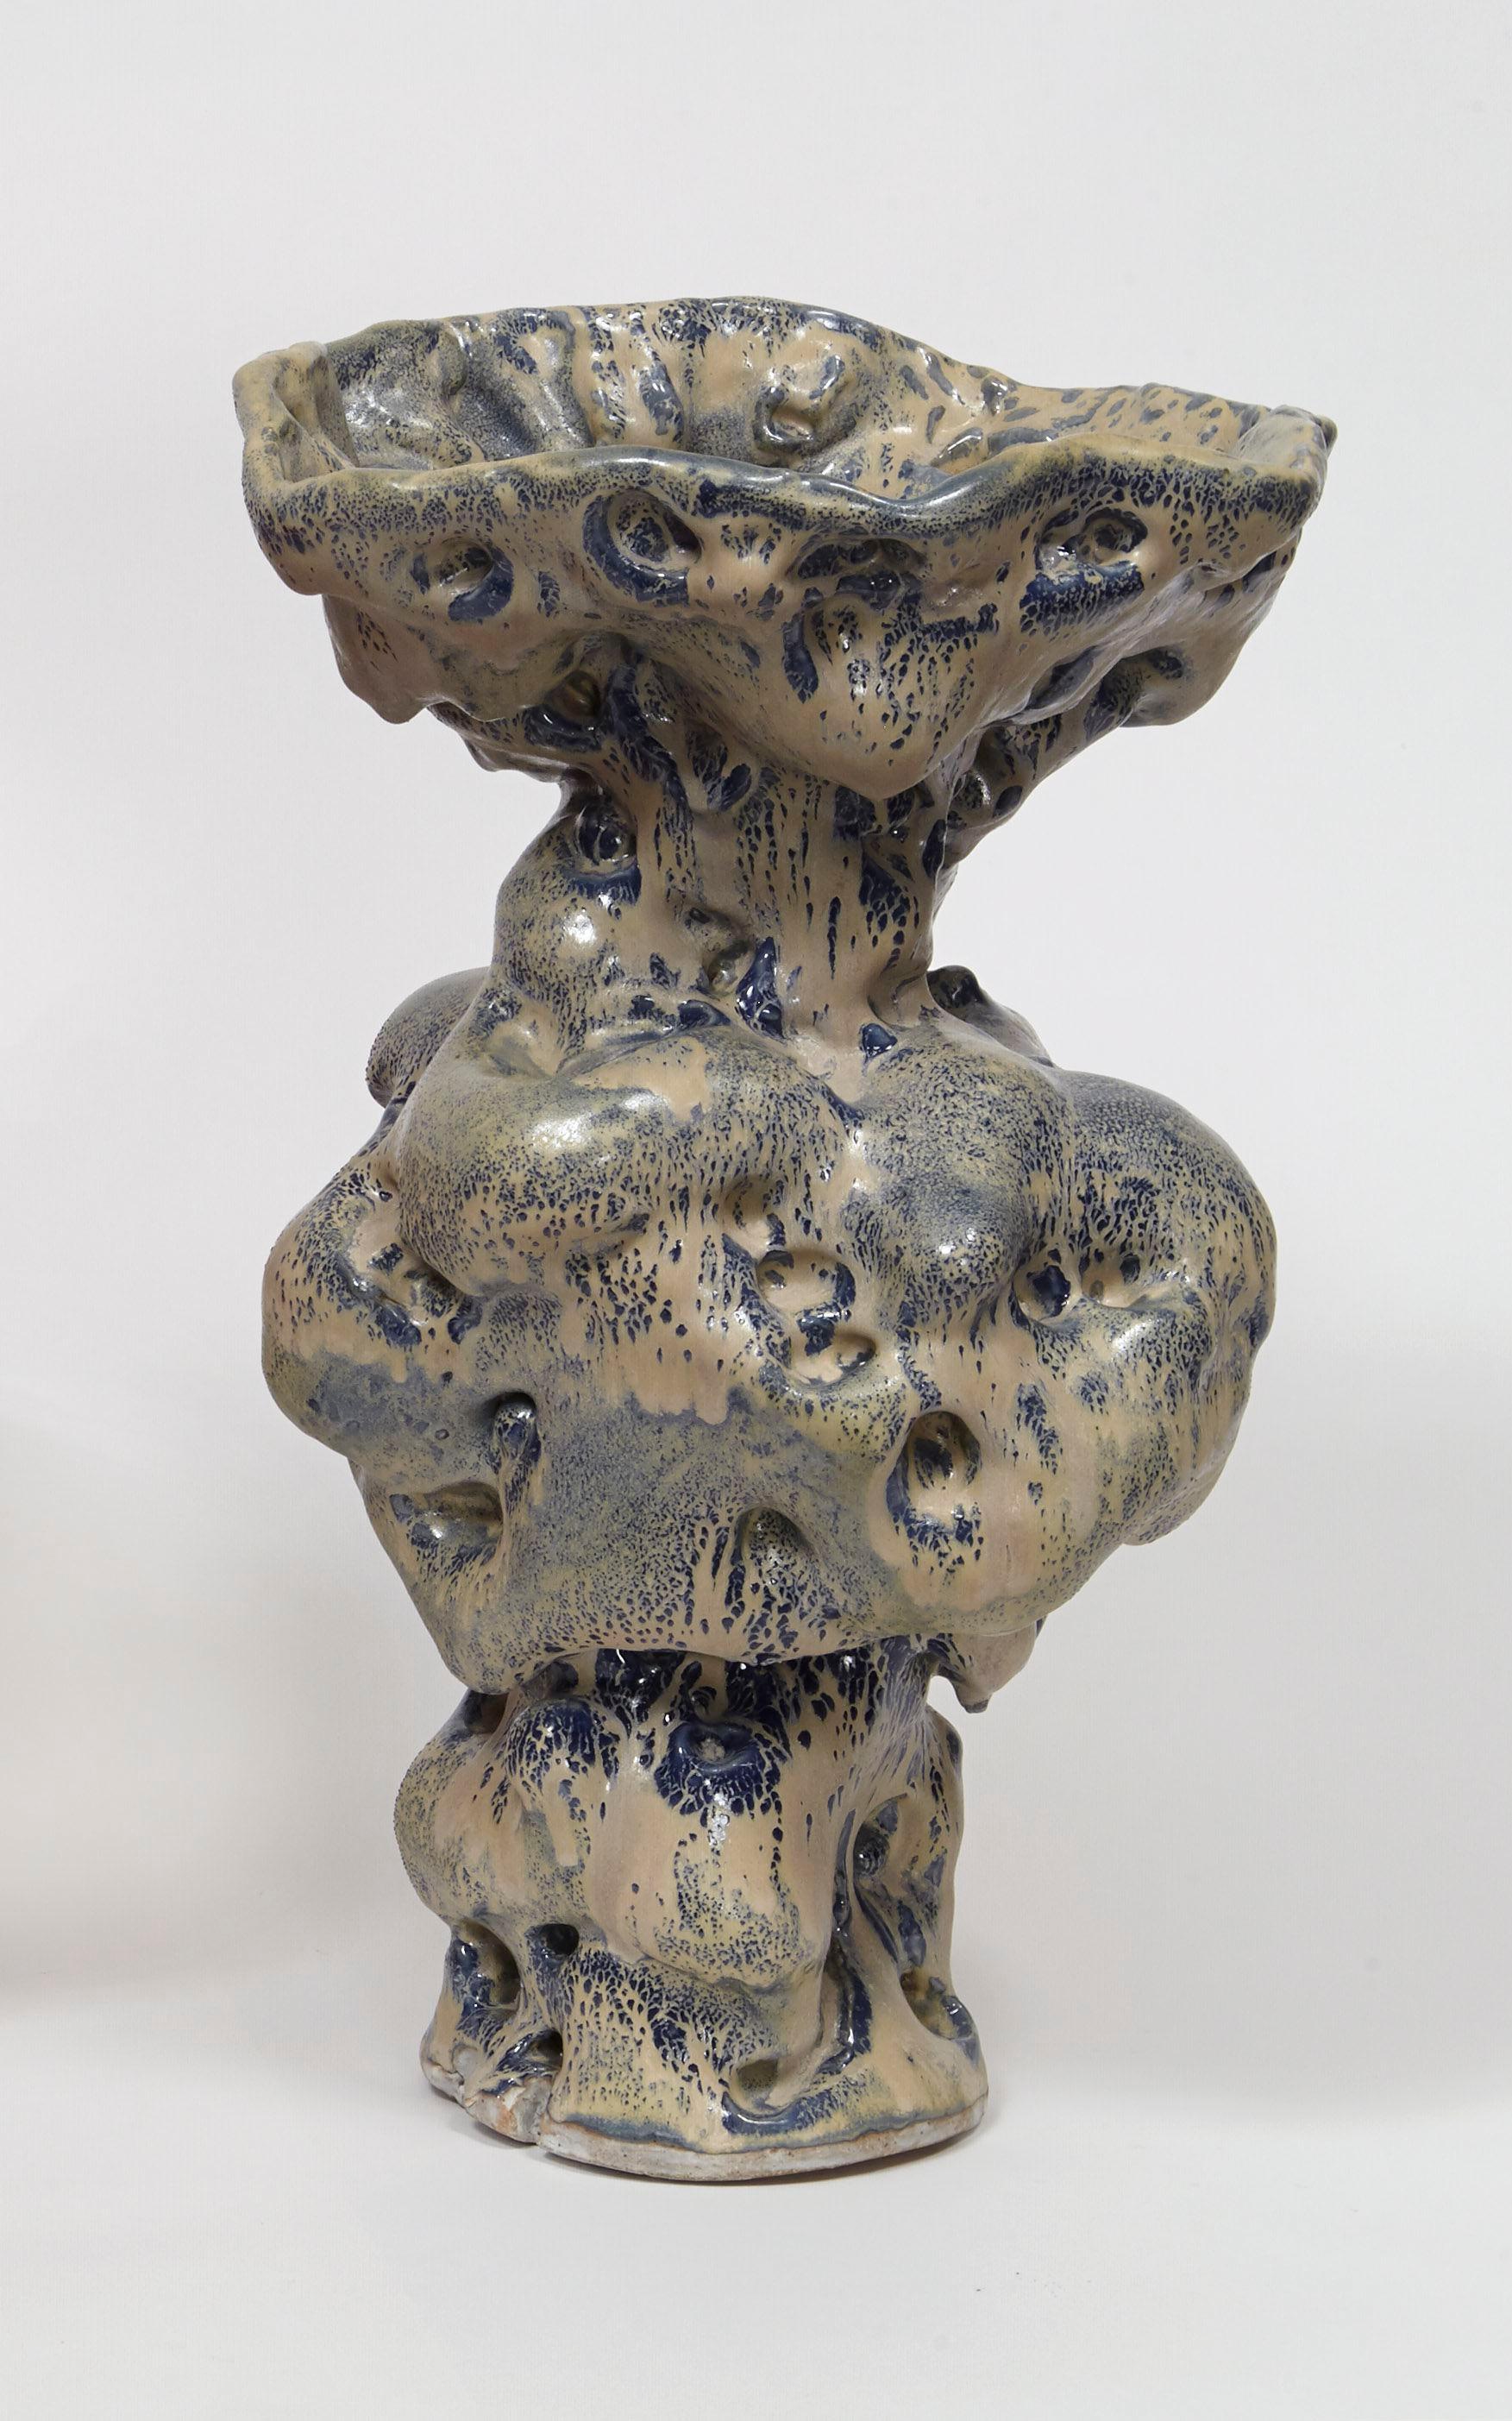 Donna Green, Byrd, Stoneware, Slip, and Glazes, 2015; blue and grey swirl vessel